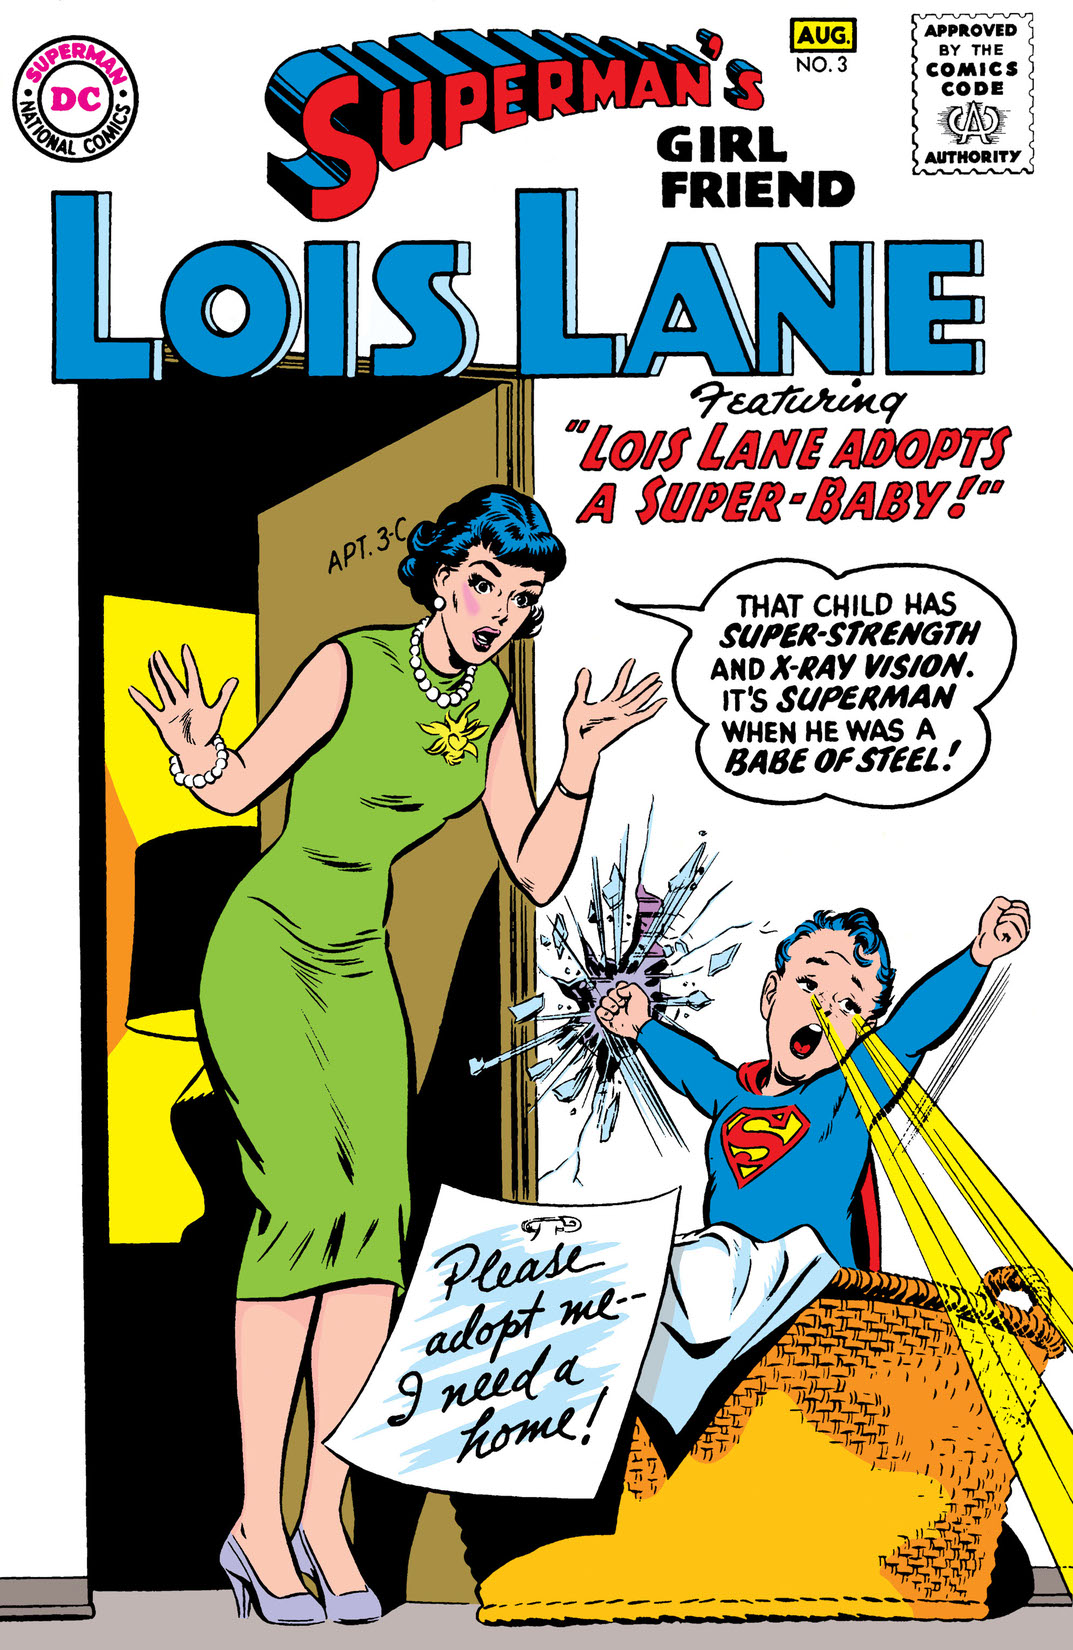 Superman's Girl Friend Lois Lane #3 preview images